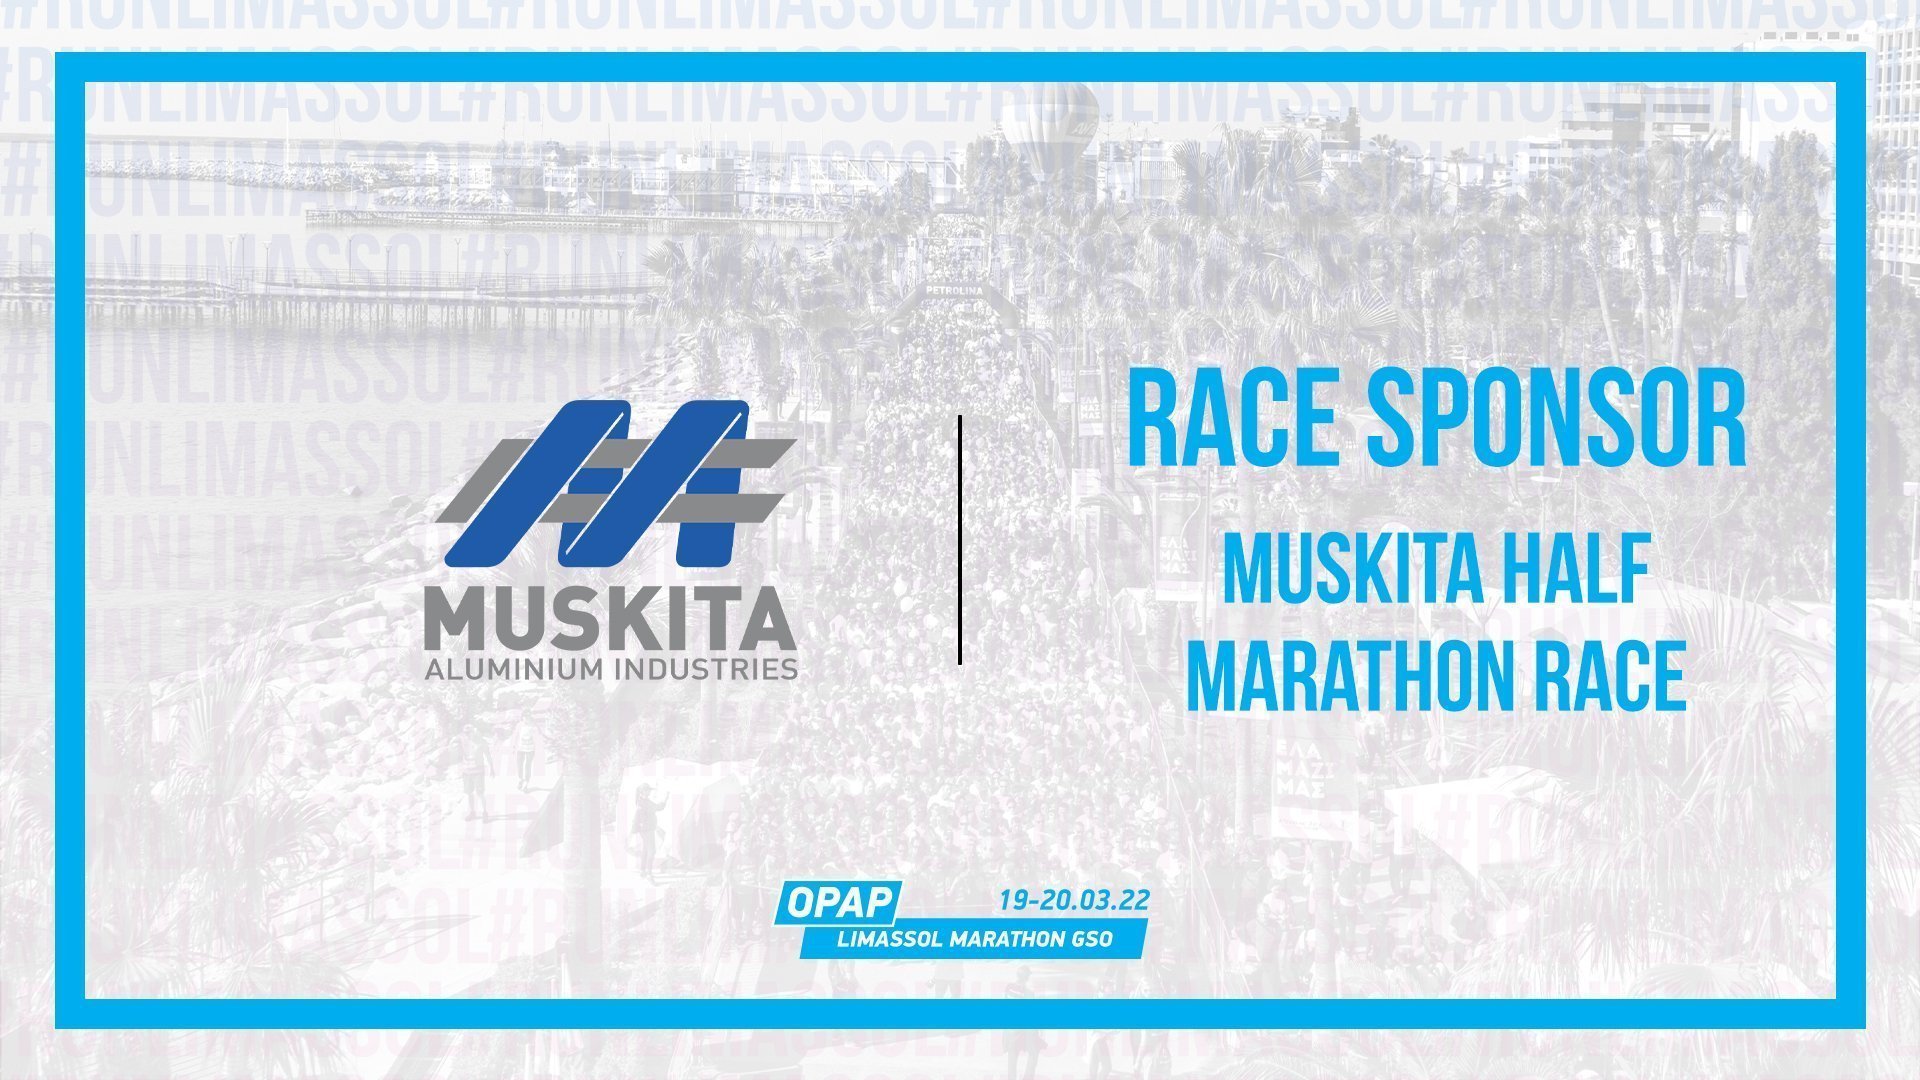 MUSKITA Aluminium Industries sponsors the 14th OPAP Limassol Marathon GSO Half Marathon Race